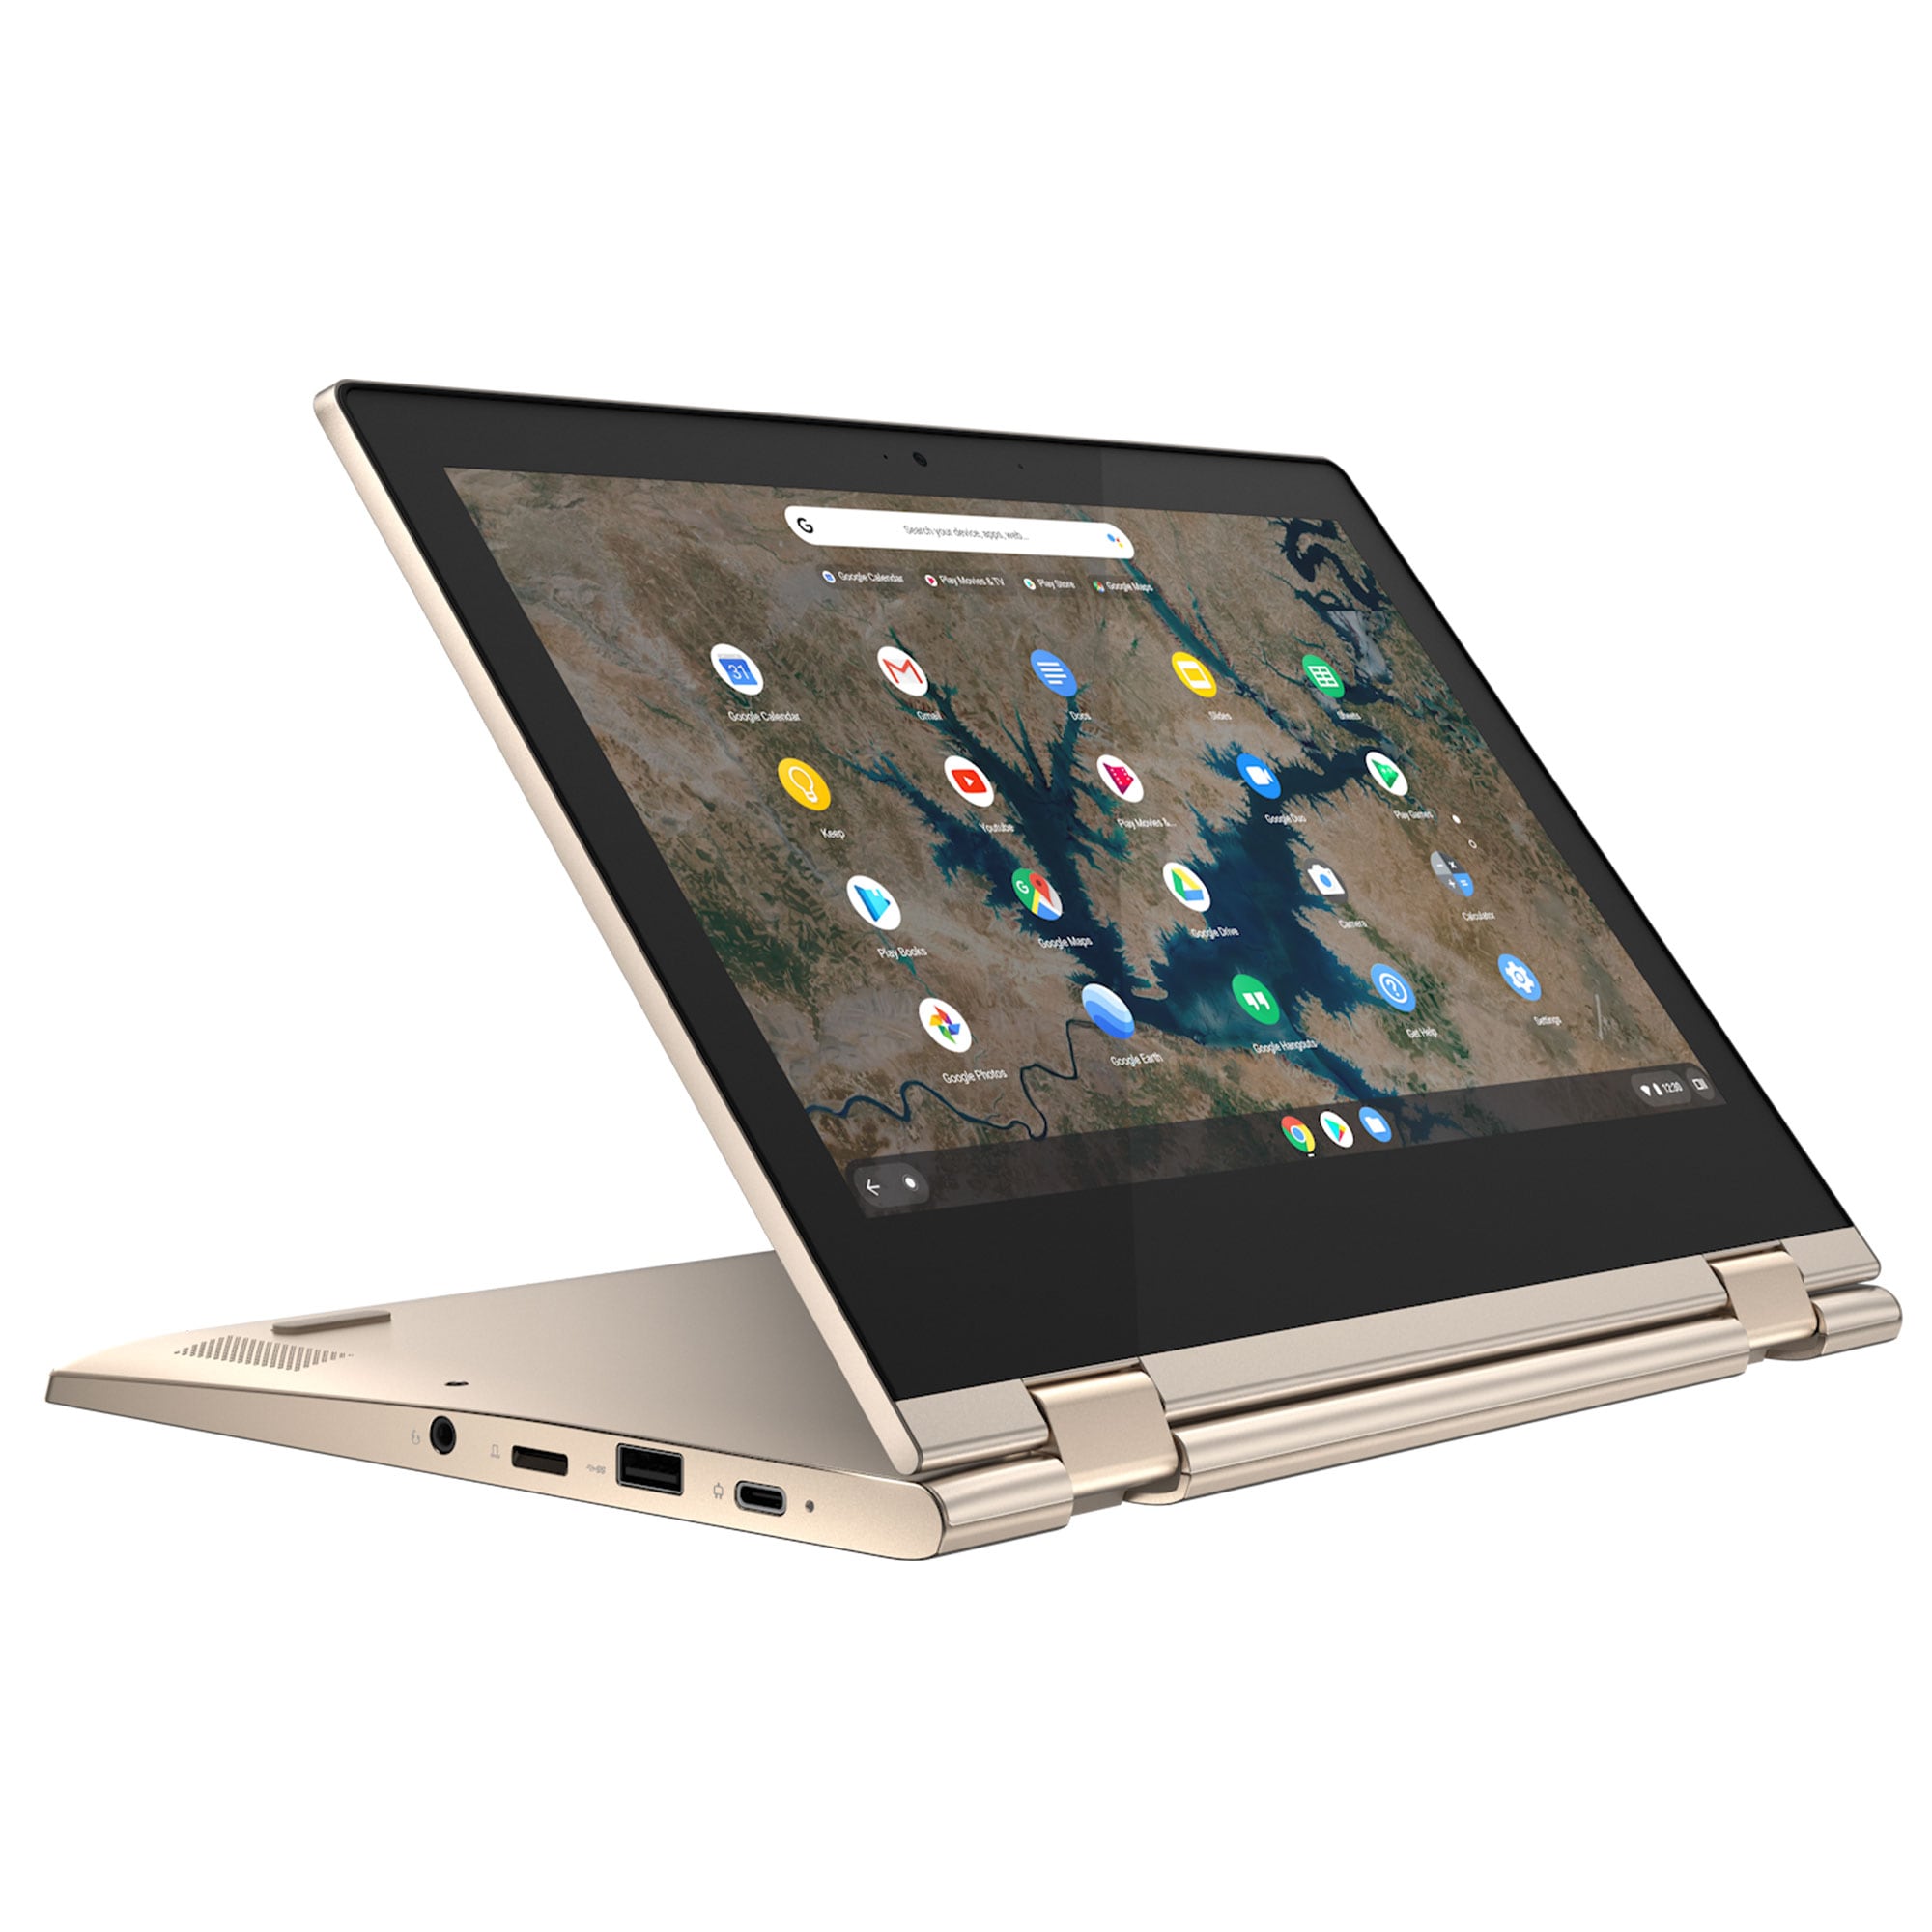 Lenovo Chromebook Flex 3 11.6" Touchscreen 2-in-1 Laptop, Intel Celeron N4020, 4GB RAM, 32GB HD, Chrome OS, Almond, 82BB0007US - image 1 of 7